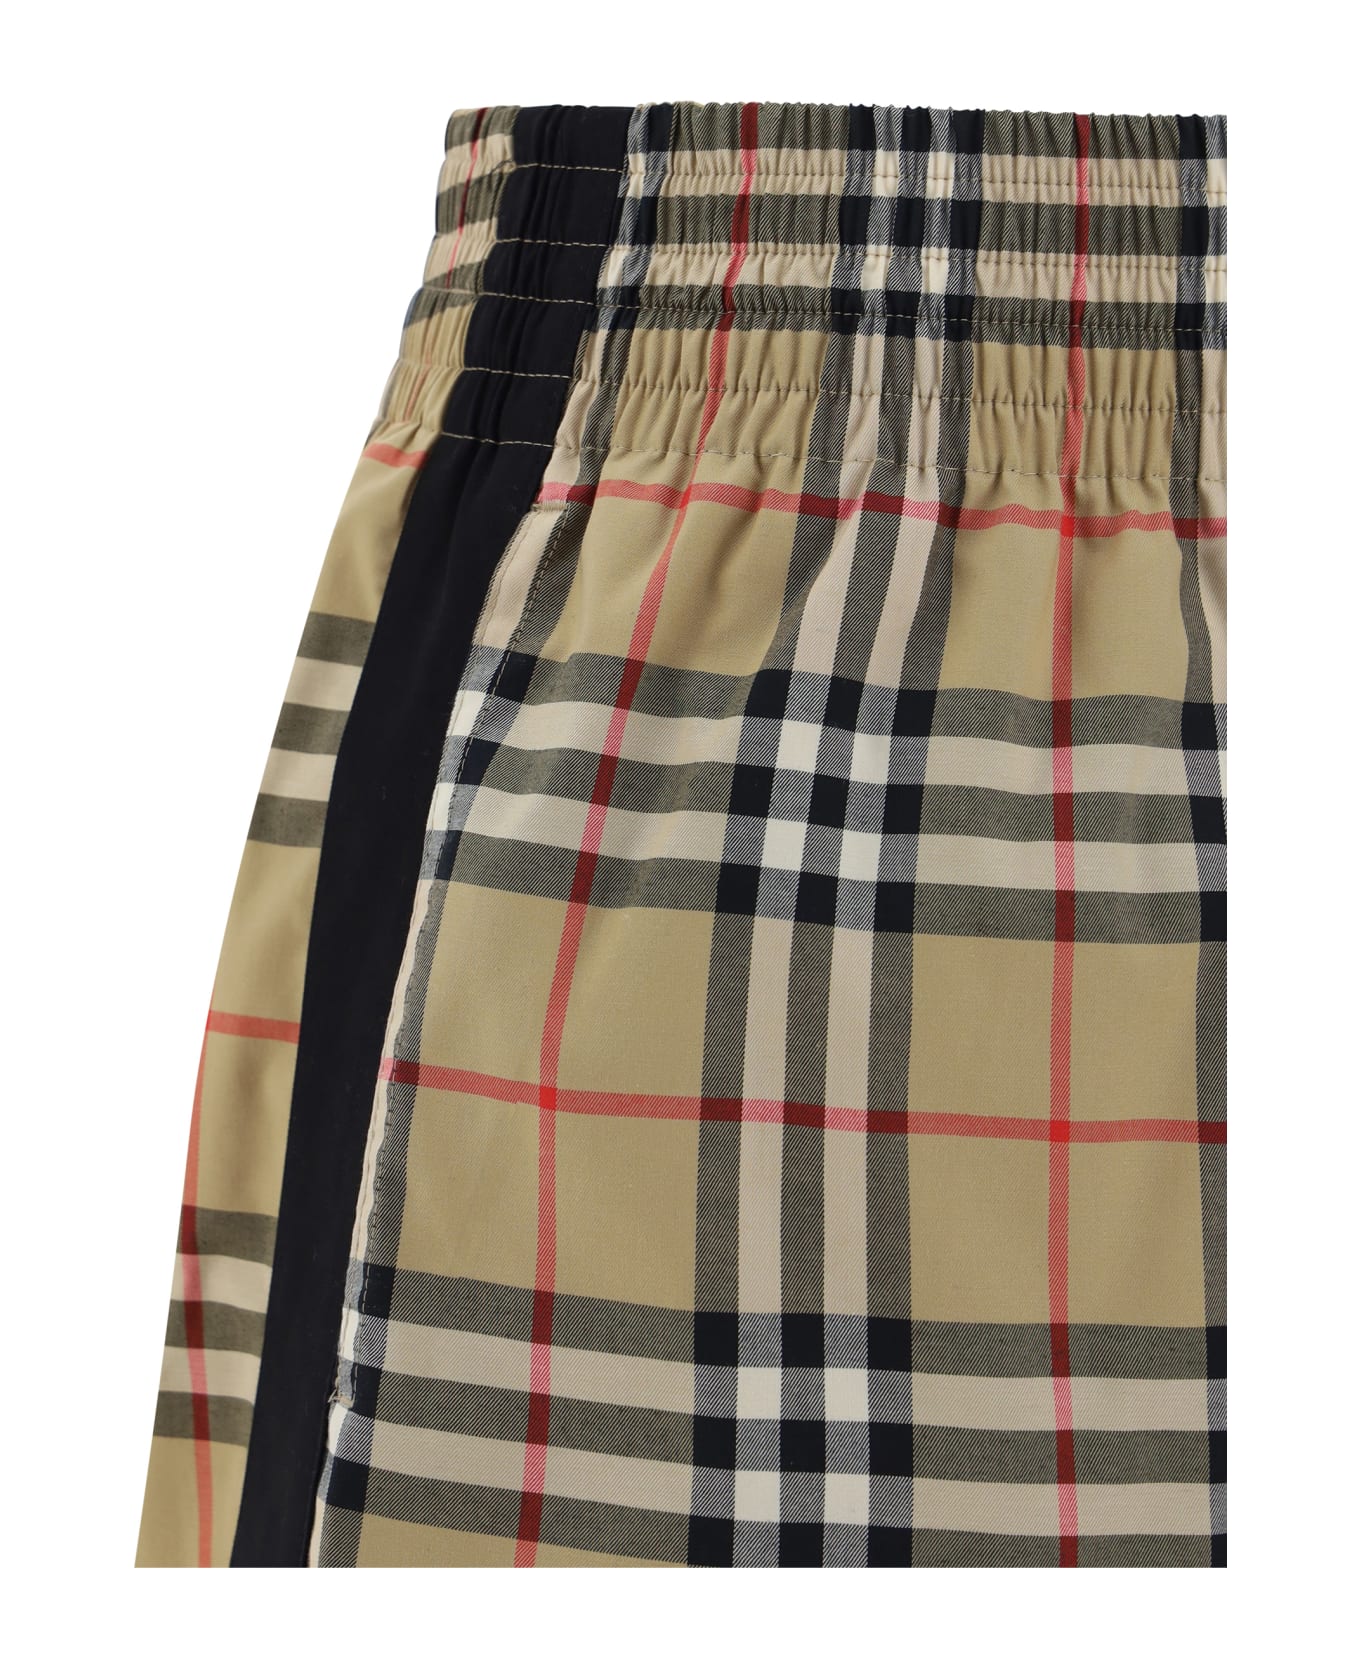 Burberry Beige Vintage Check Cotton Bermuda Shorts - Archive Beige Ip Chk ショートパンツ